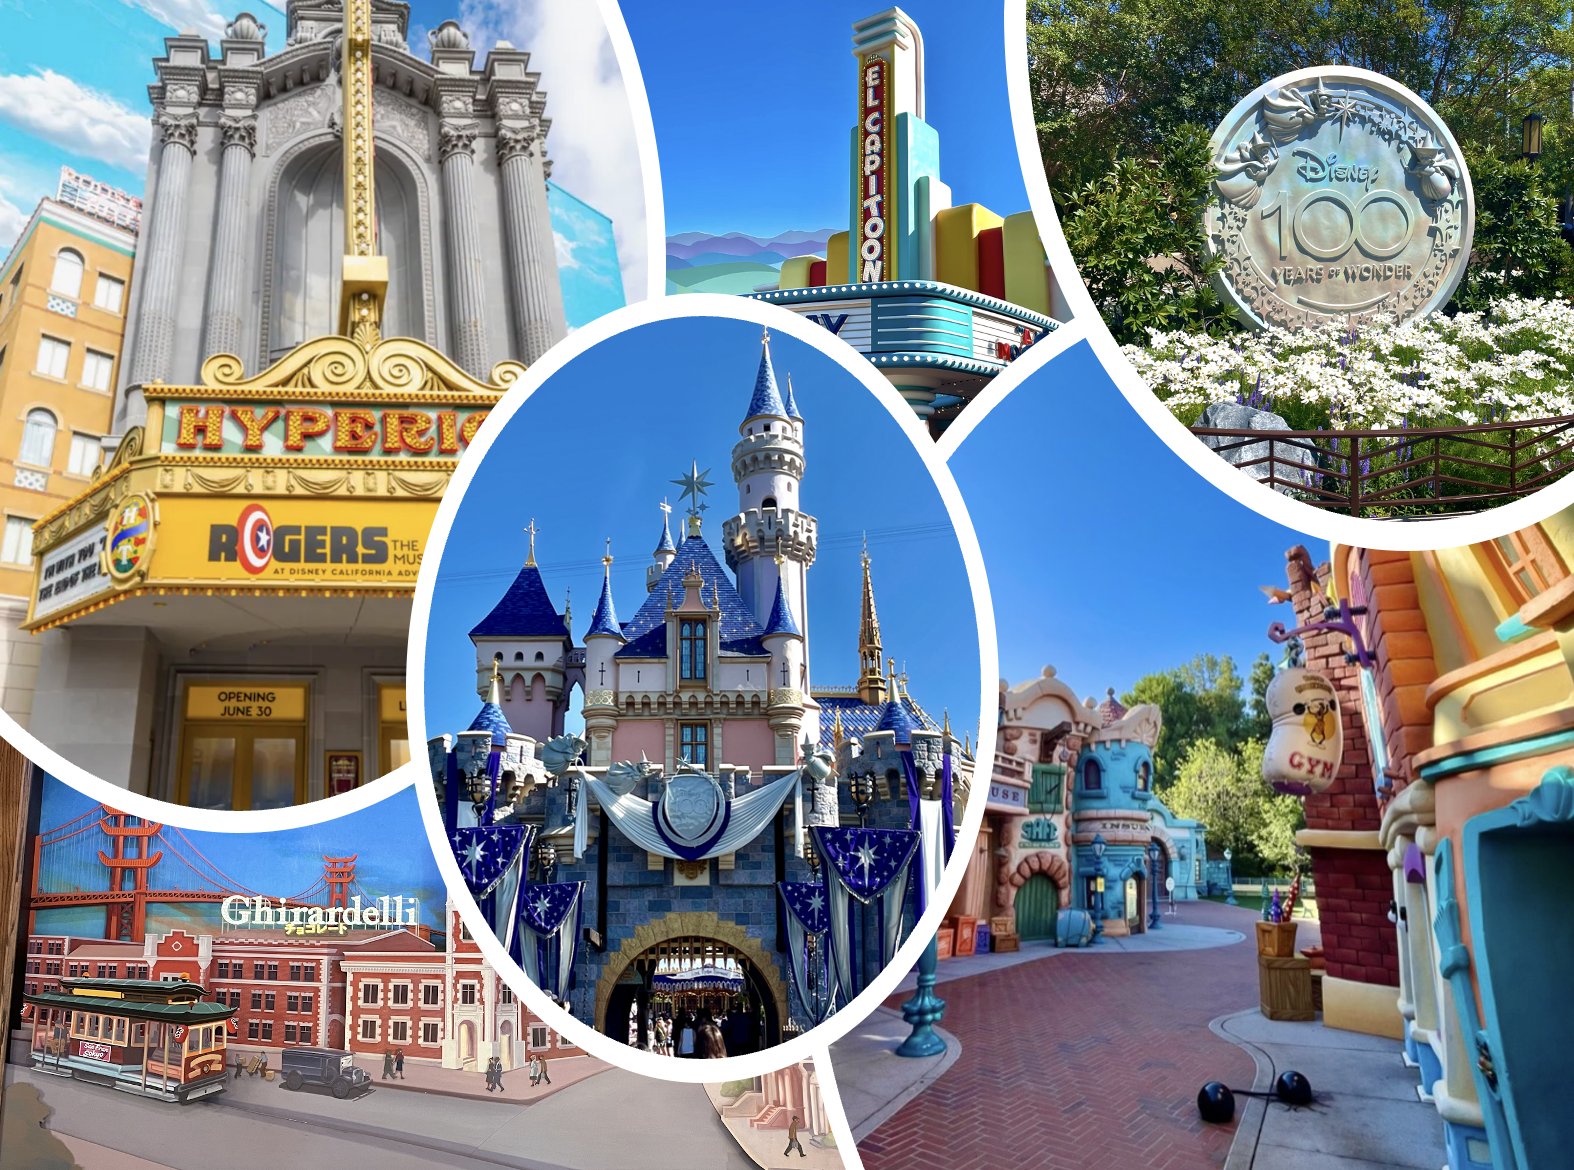 Celebrating 100 Years of Disney and More at Disneyland